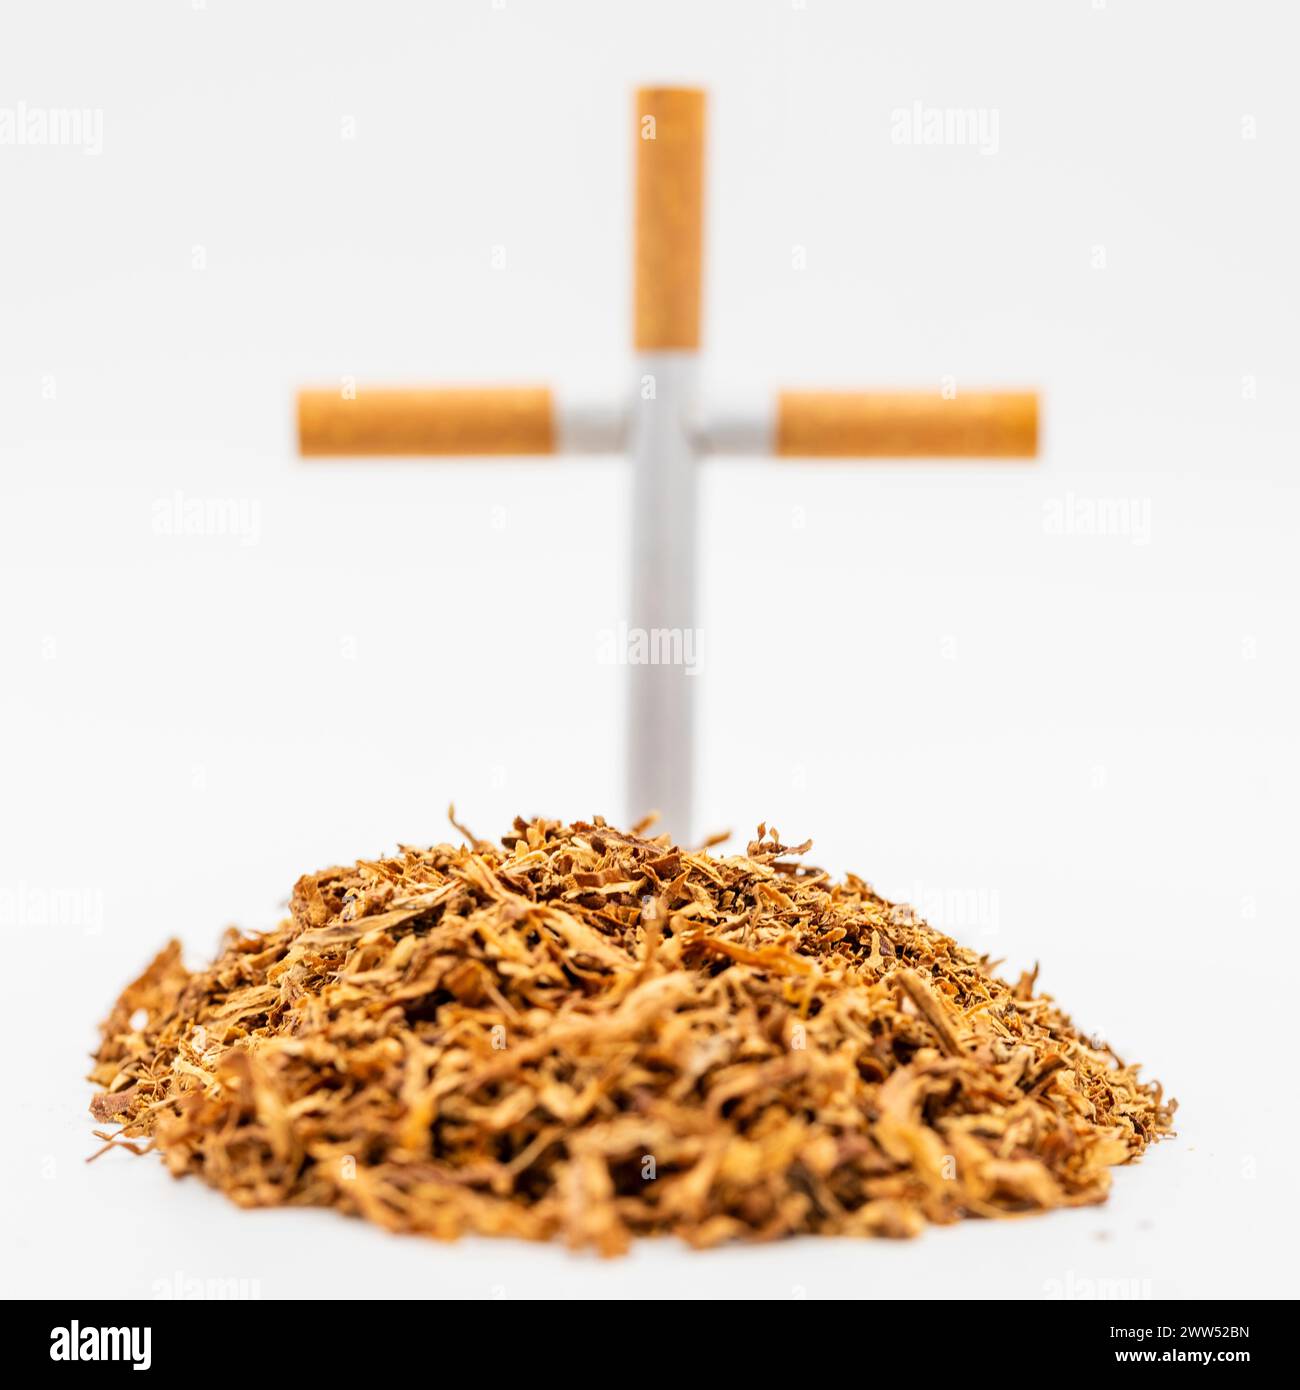 Simbólica tumba de tabaco y cigarrillos de un fumador, aislado en blanco Stock Photo